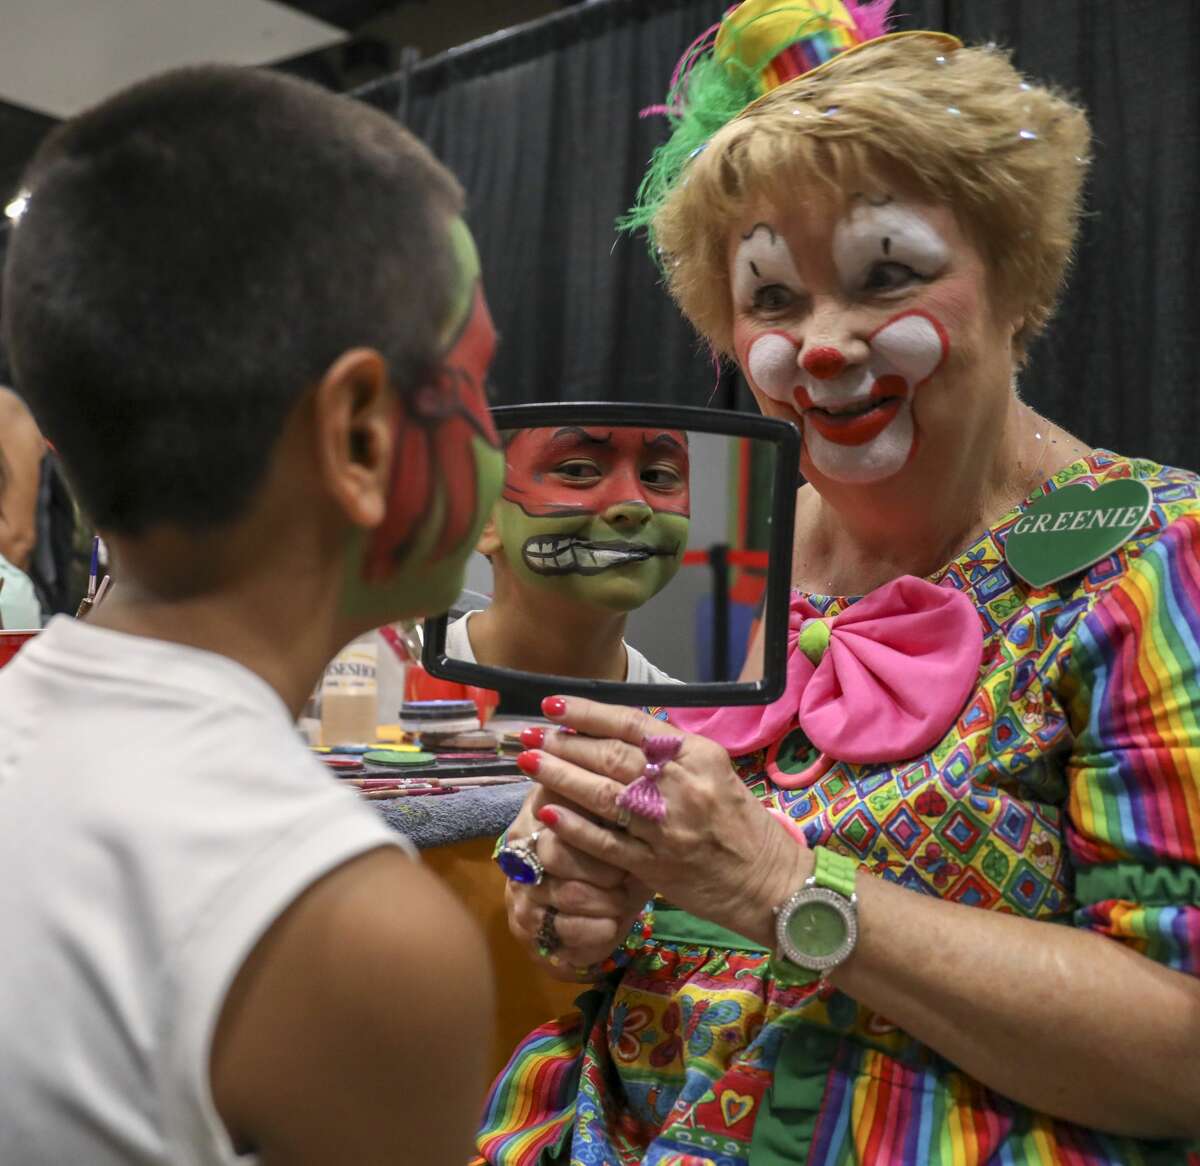 Greenie the Clown, Linda Greene, shows David Montez III his Mutant Ninja Turtle face paint during the Family Fun Day on Saturday, Aug. 10, 2019 at the Horseshoe Pavilion.